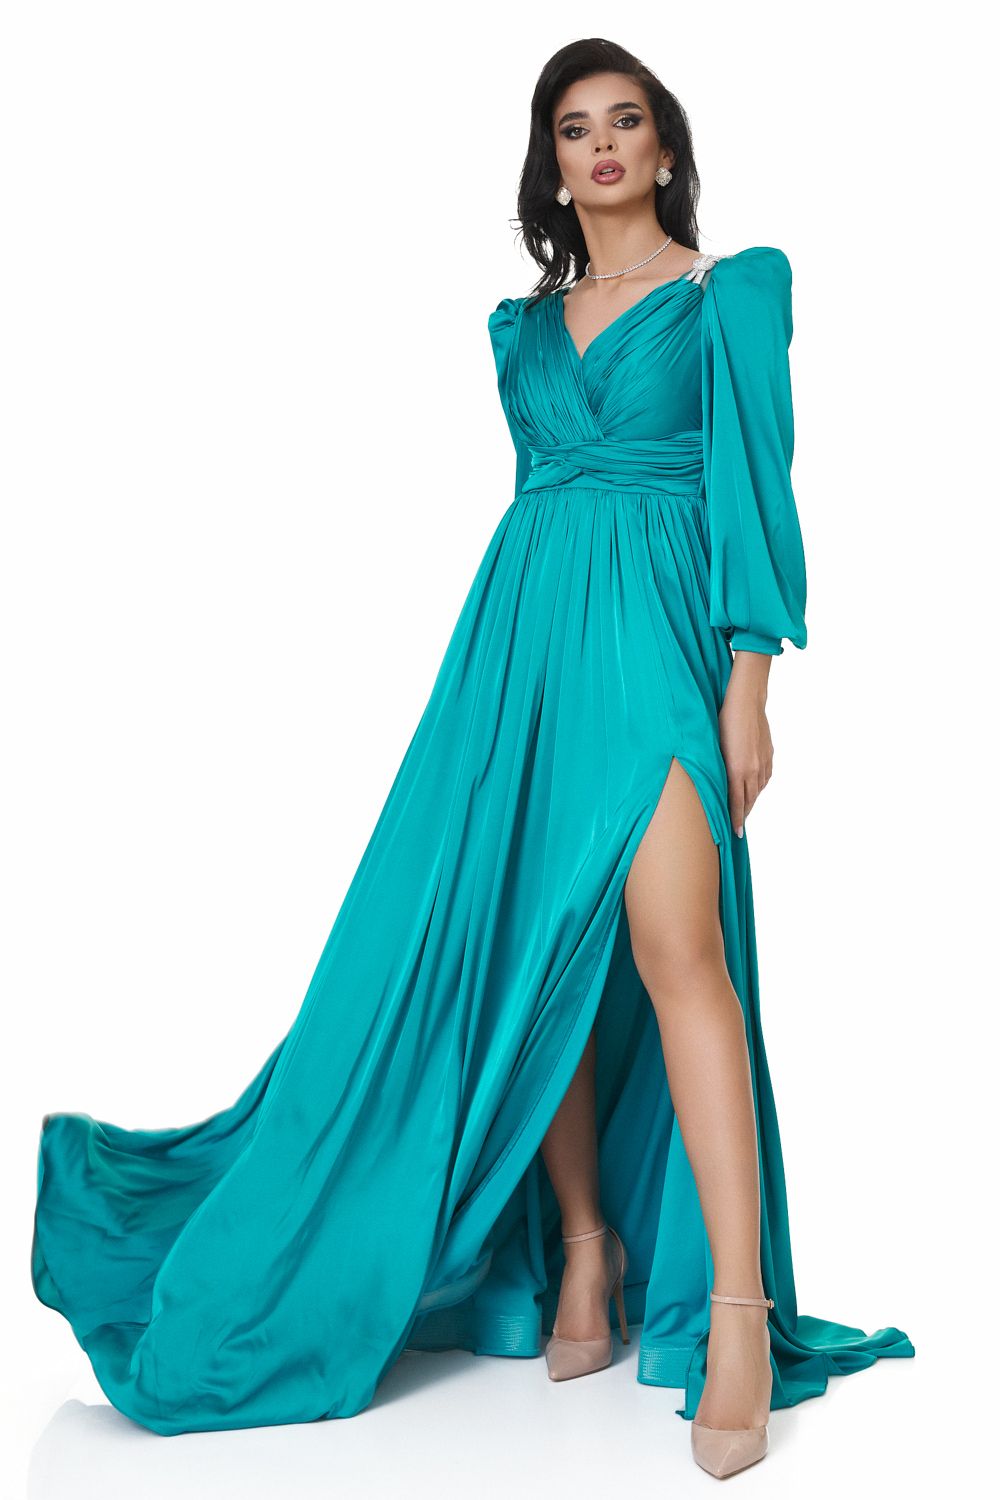 Turquoise satin veil long dress Cristalini Bogas